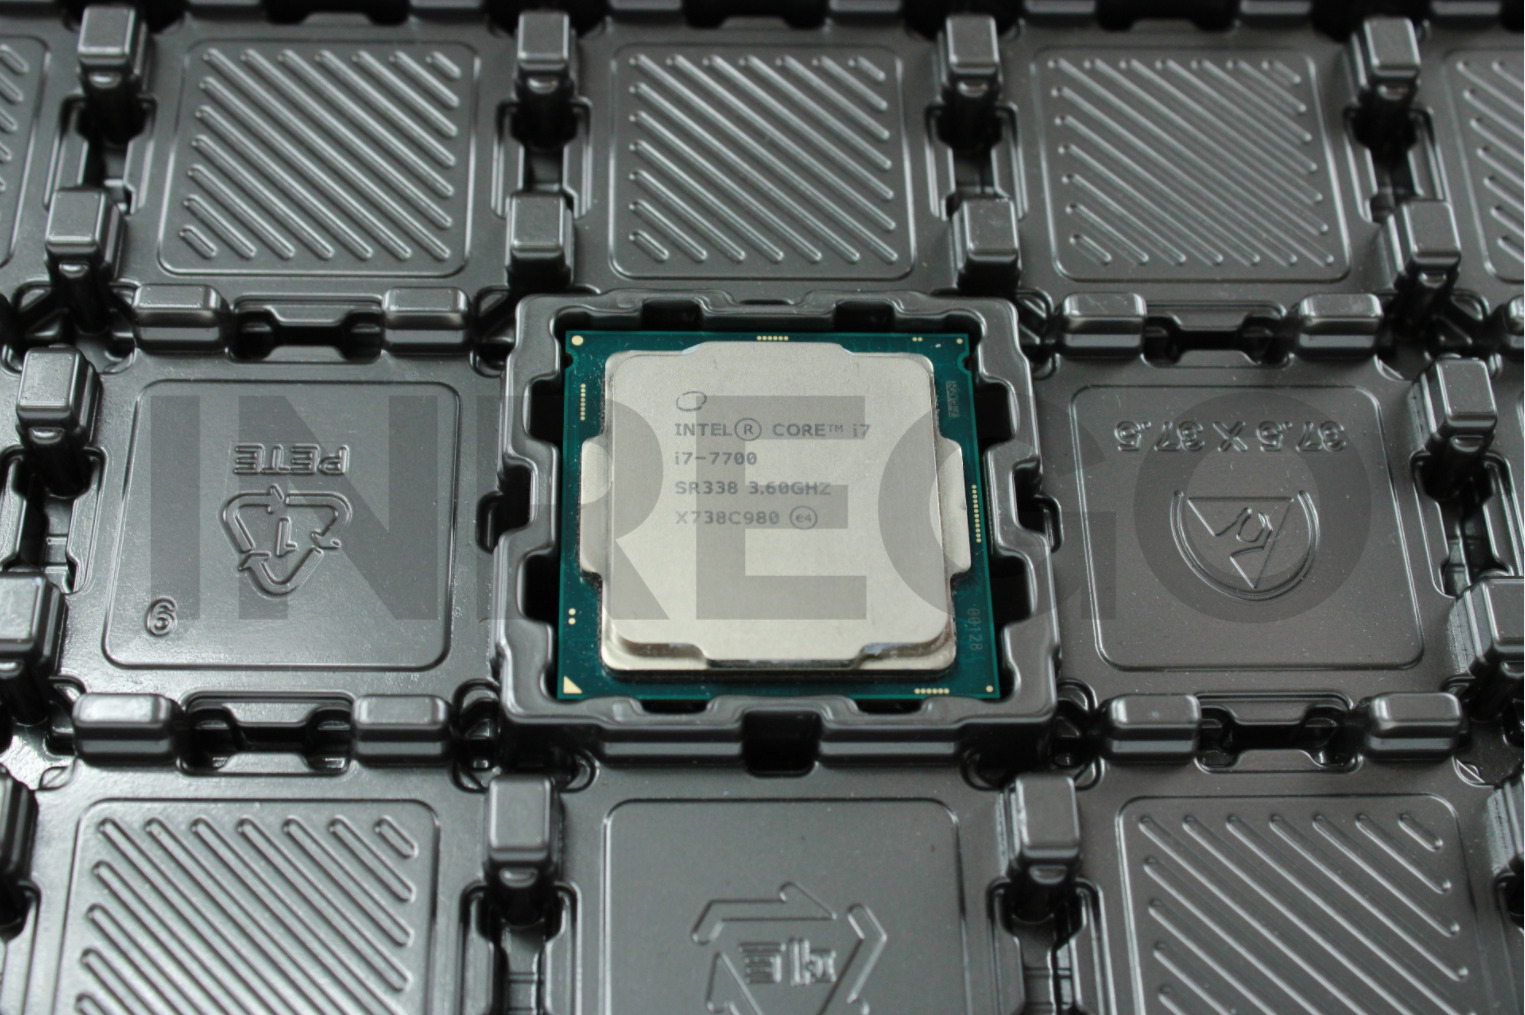 Intel I7-7700 CPU SR338 SOCKET LGA1151 3.60GHz